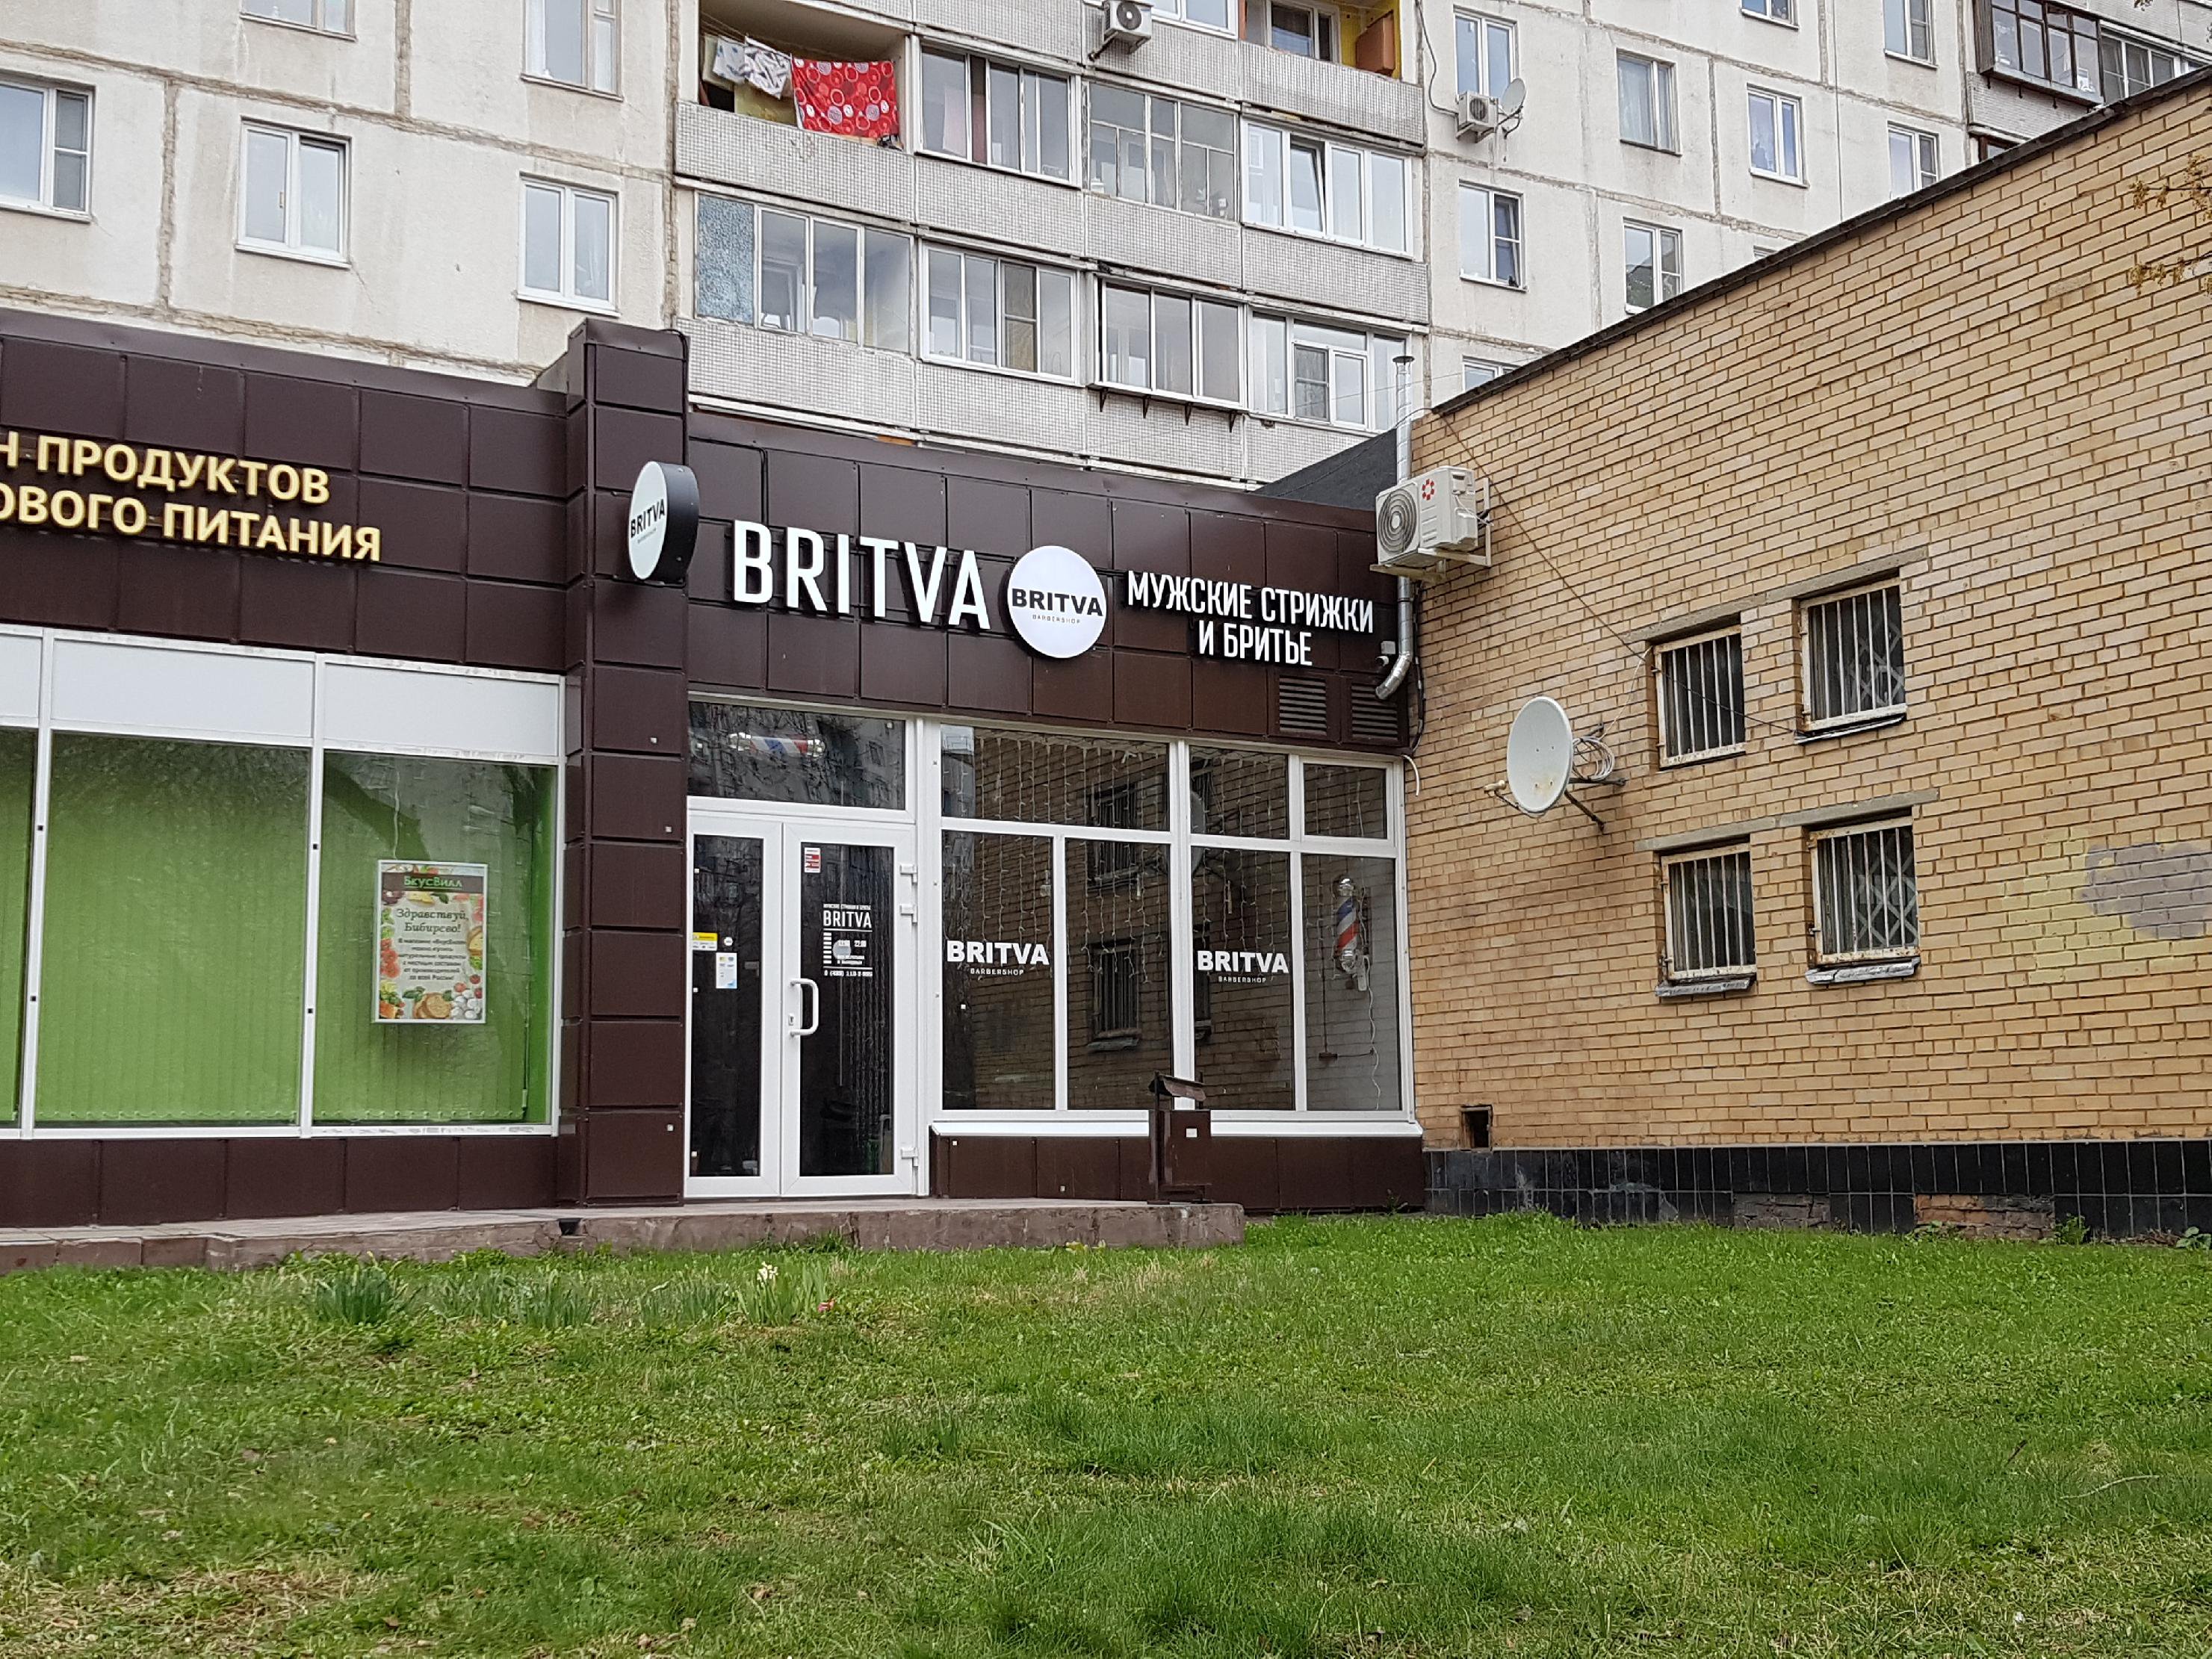 Britva, барбершоп, Мурановская улица, 7, 1 этаж